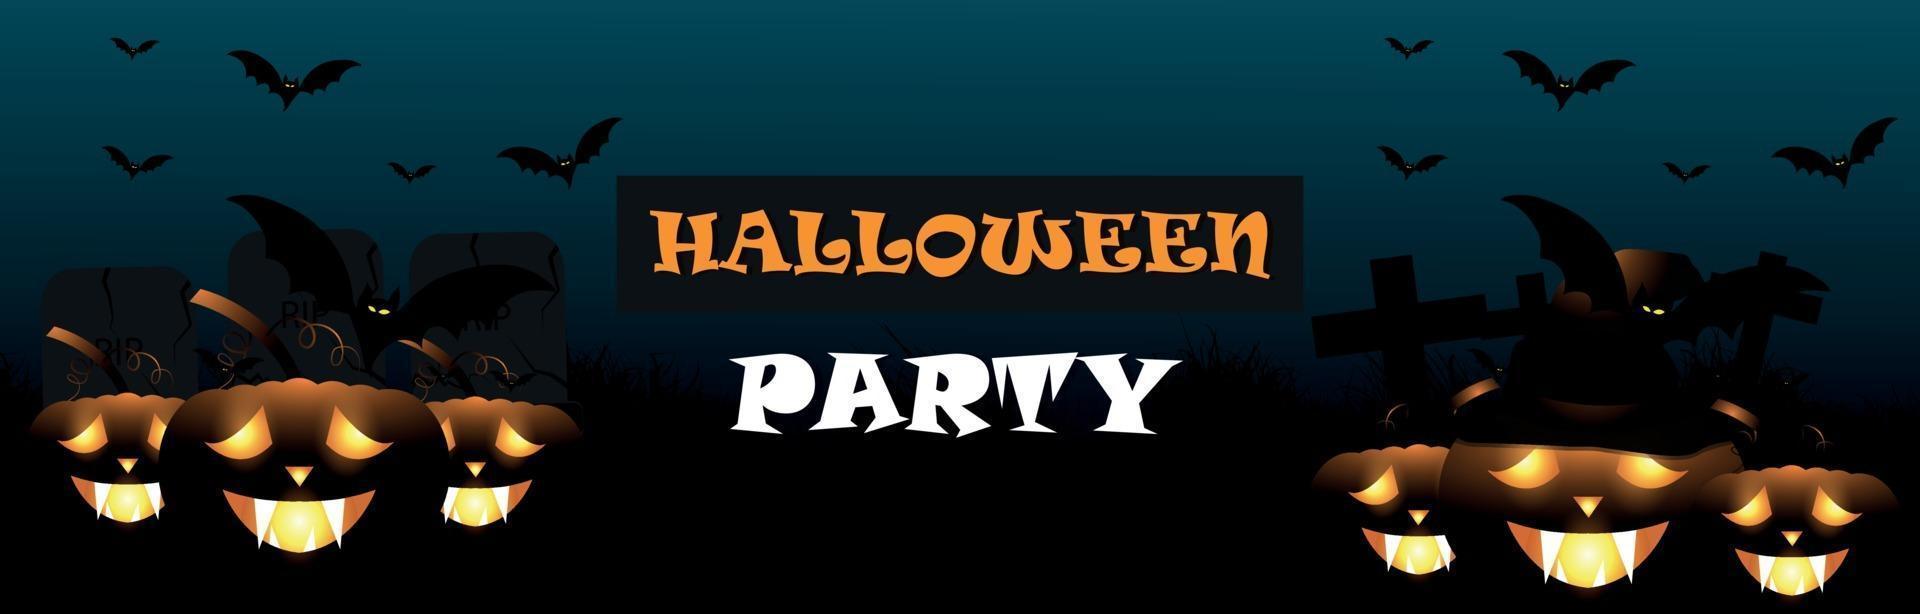 Banner de fiesta de Halloween con calabaza brillante, murciélagos voladores sobre fondo de terror vector